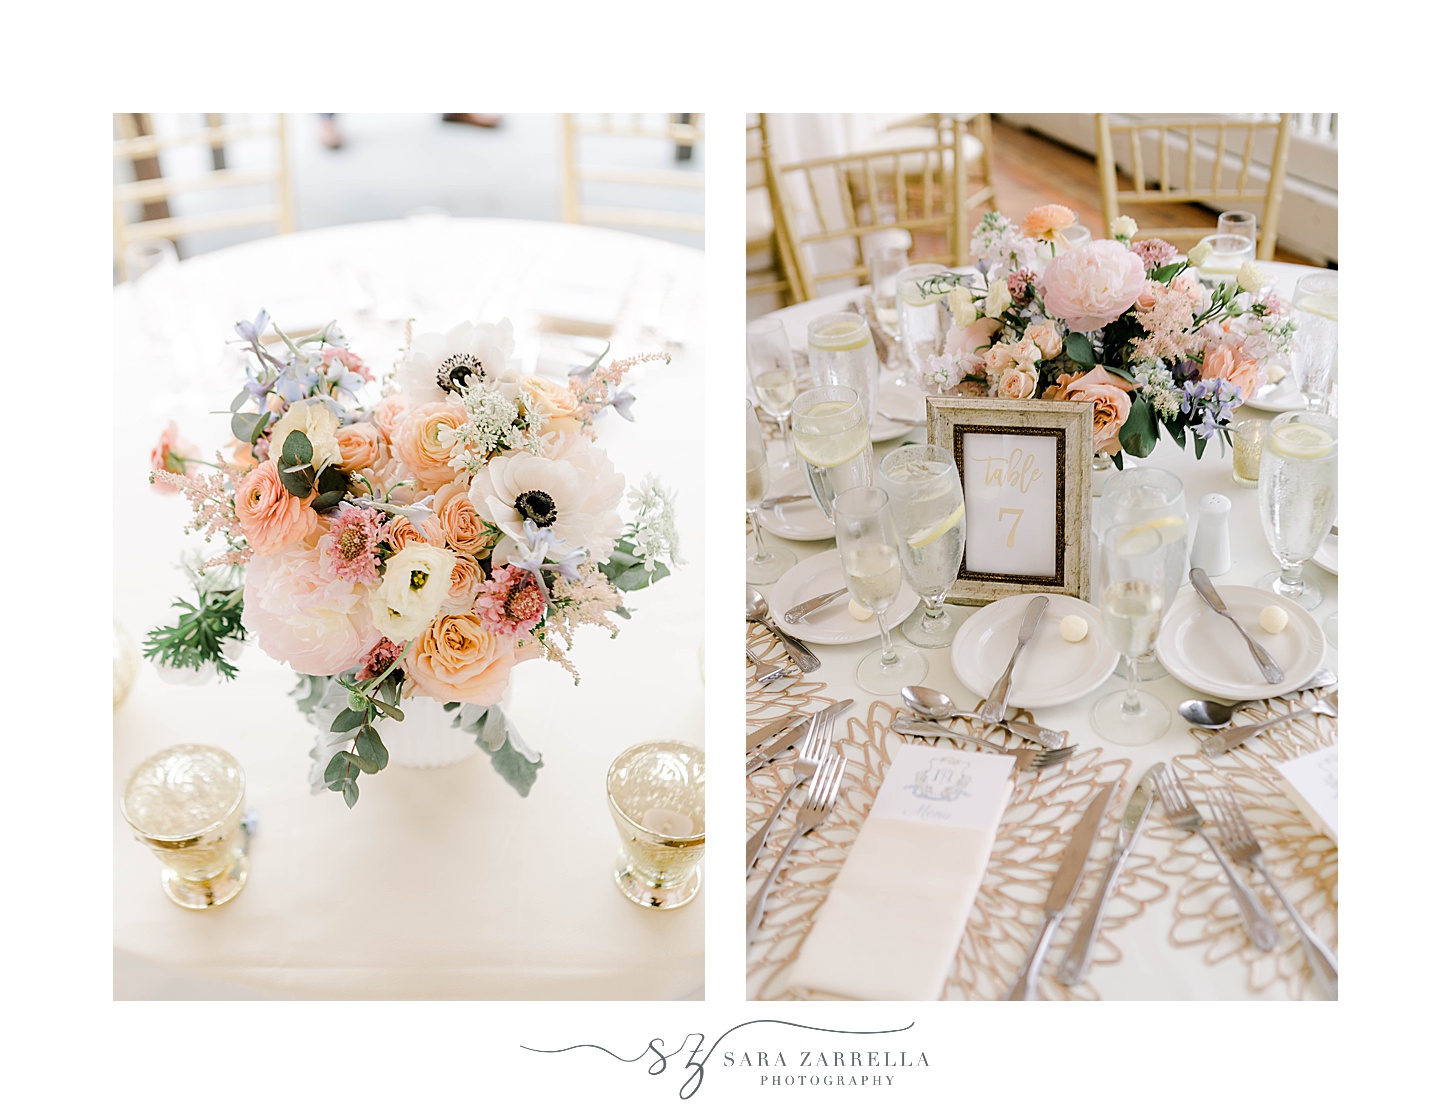 elegant summer wedding reception at Regatta Place with pastel floral centerpieces